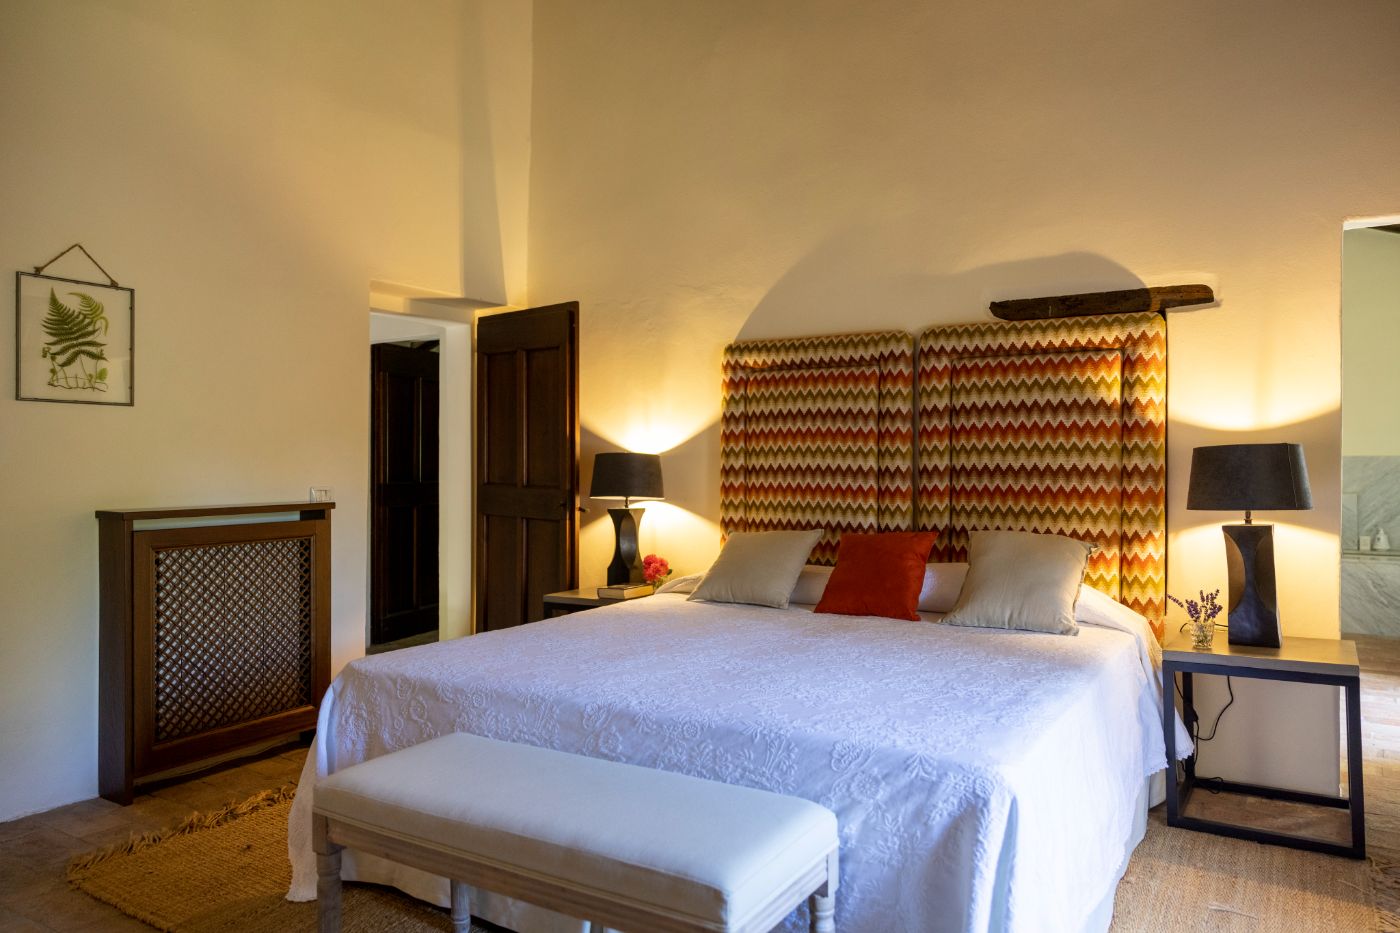 The fourth double bedroom at Villa Pizzicato